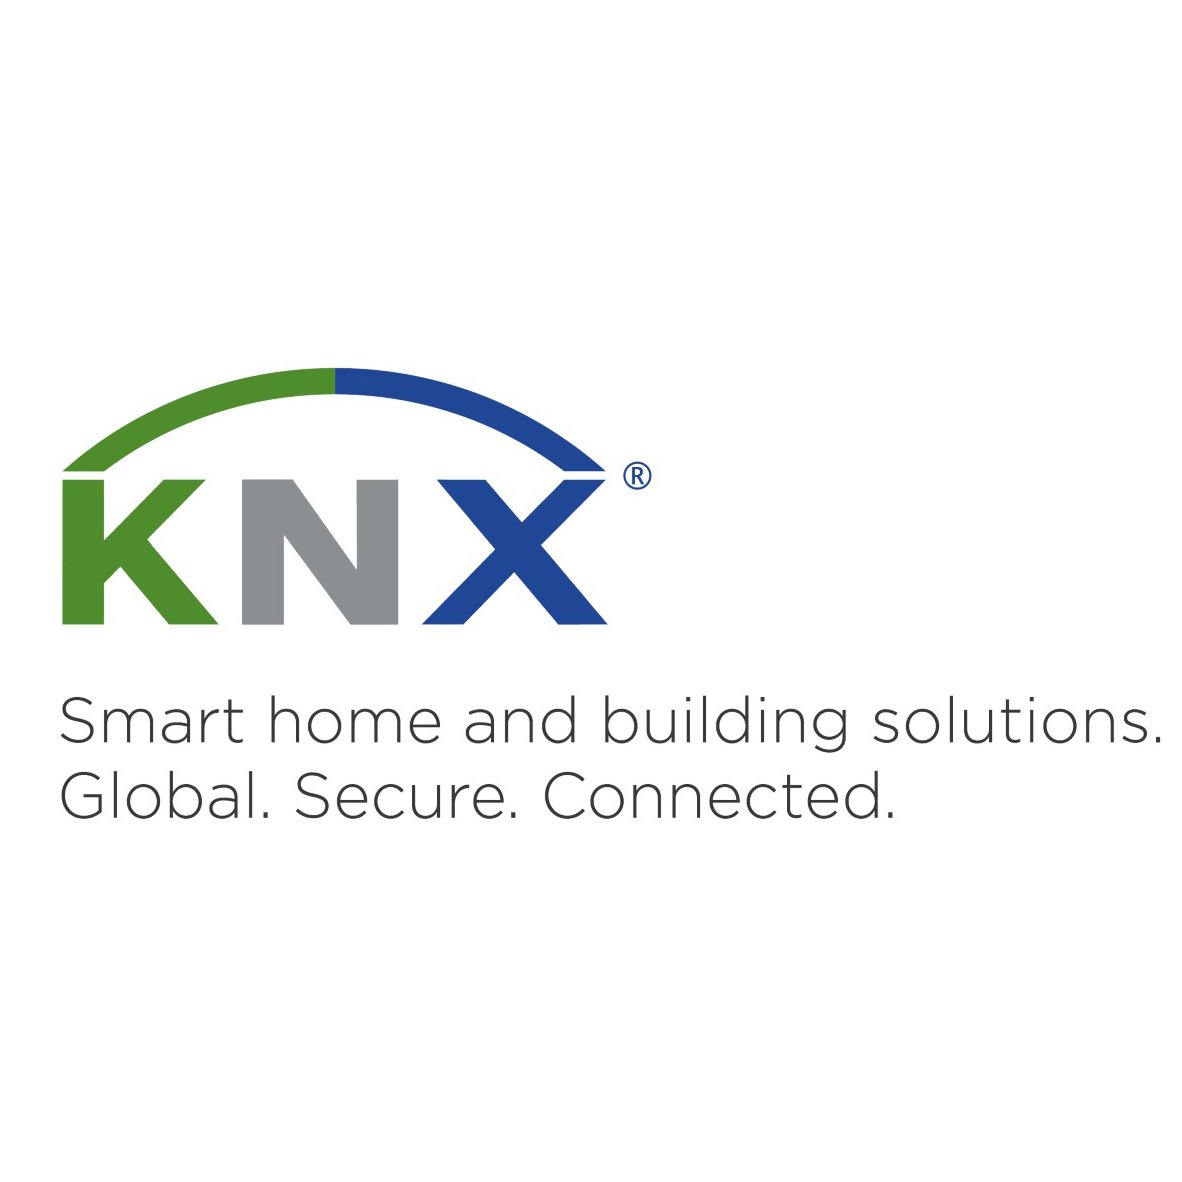 smarthome-logos-KNX